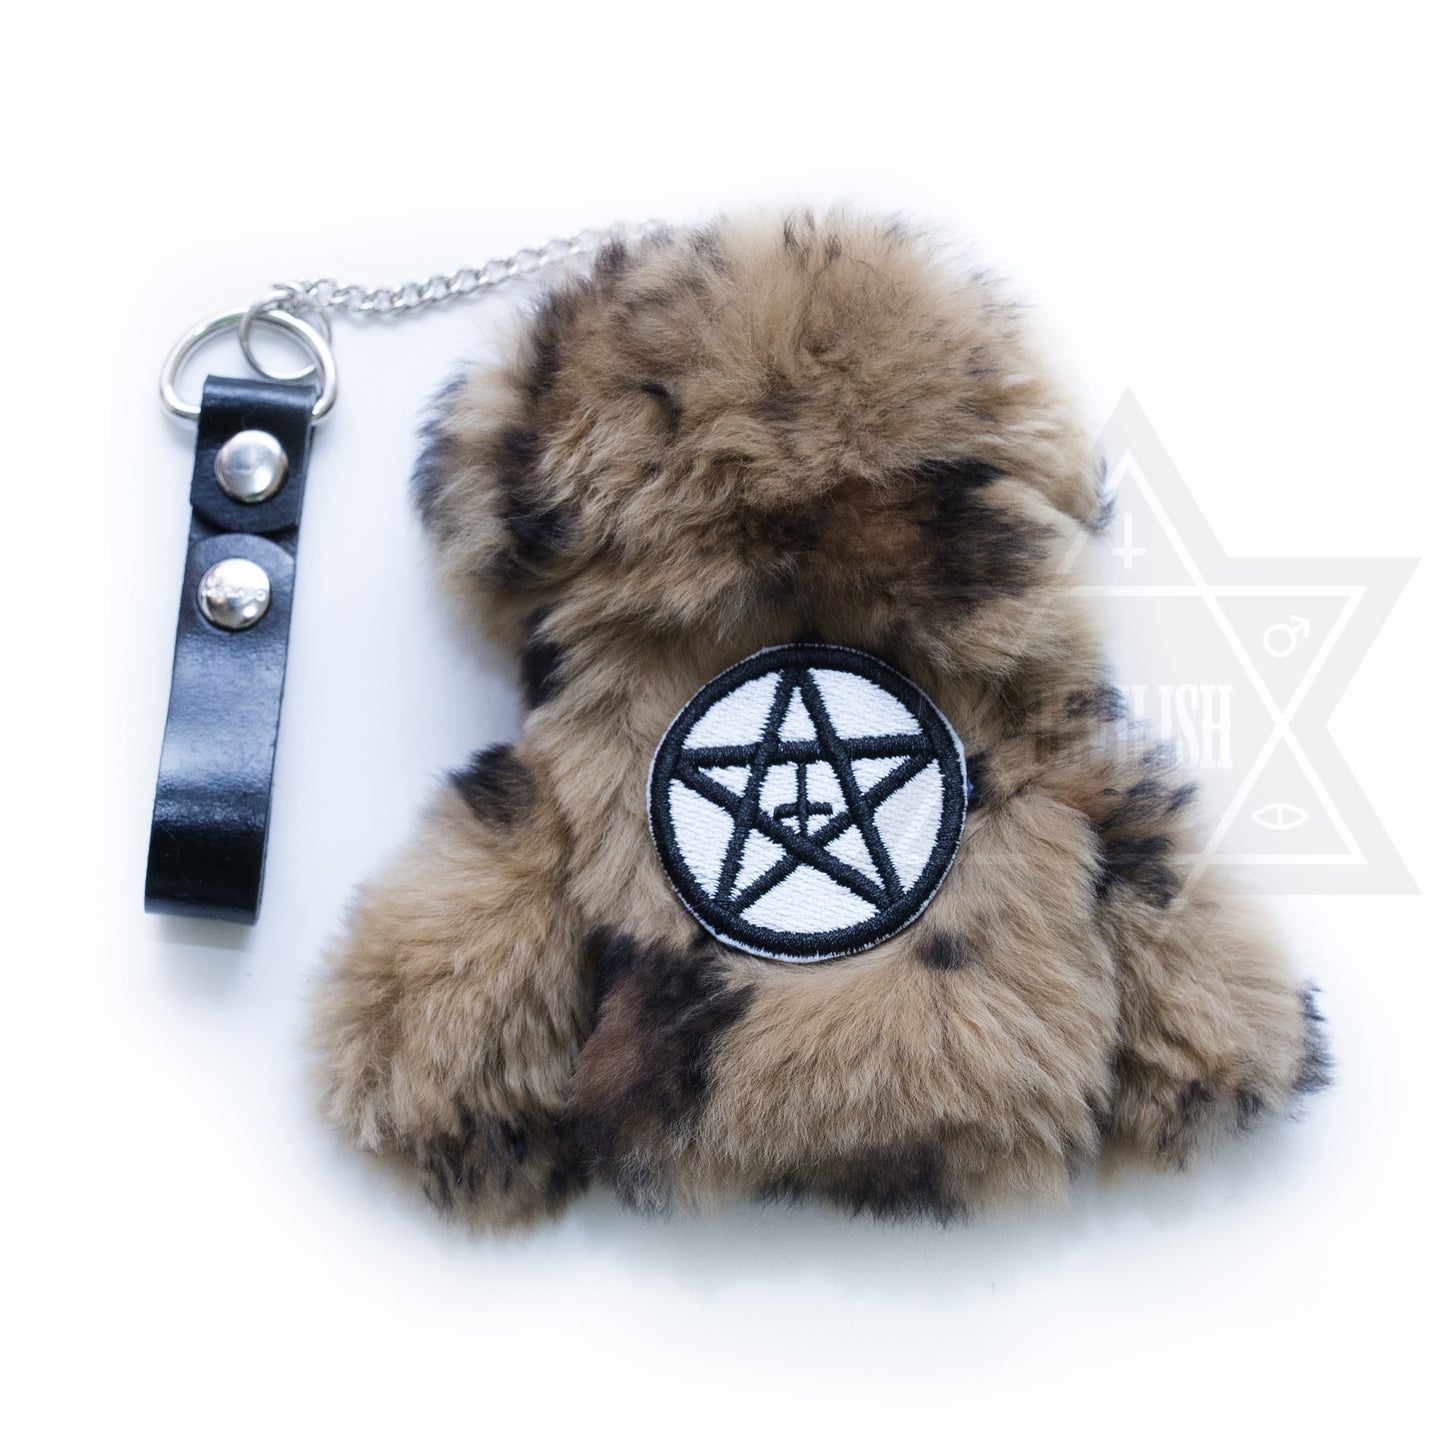 Pentacle fur coat key holder